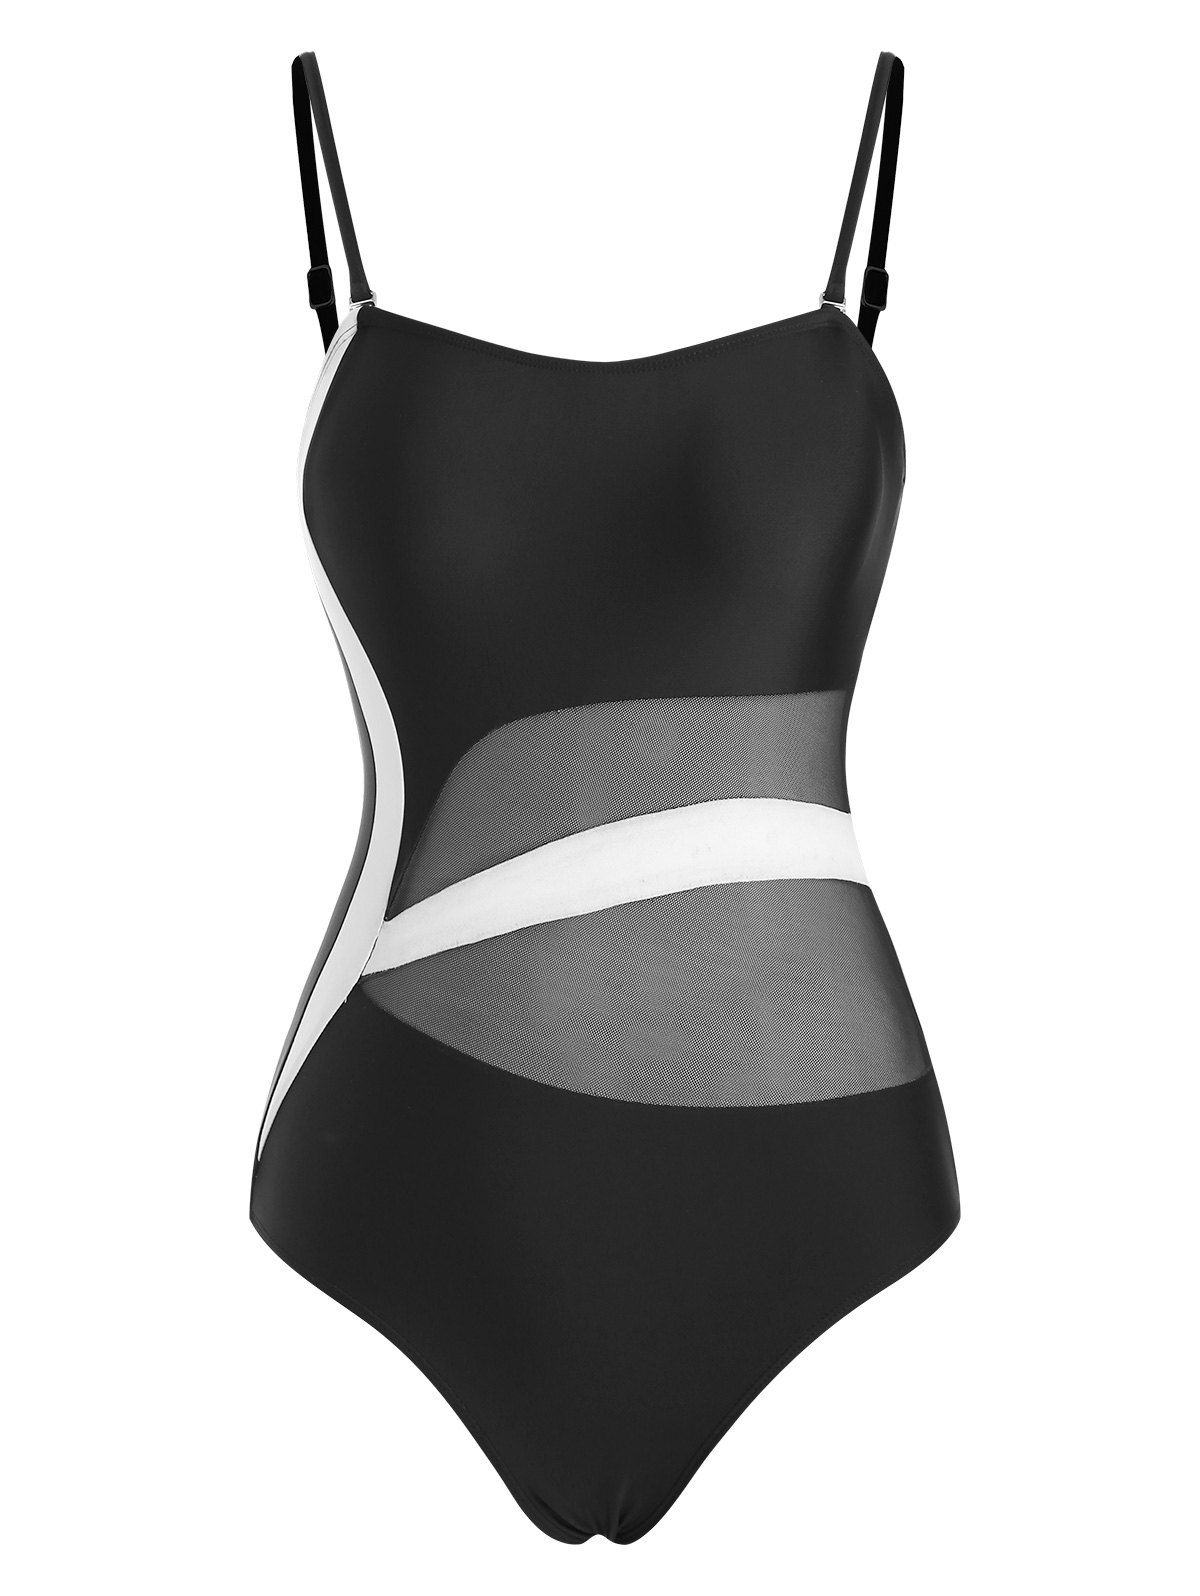 Mesh Panel Colorblock One-piece Swimsuit - BLACK L